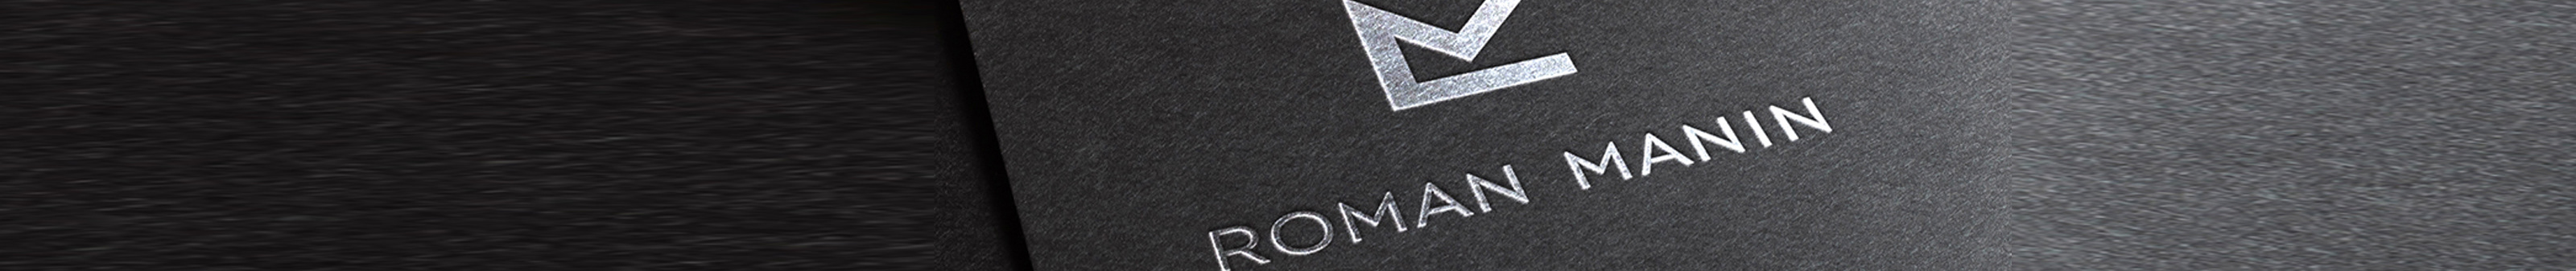 Roman Manin's profile banner